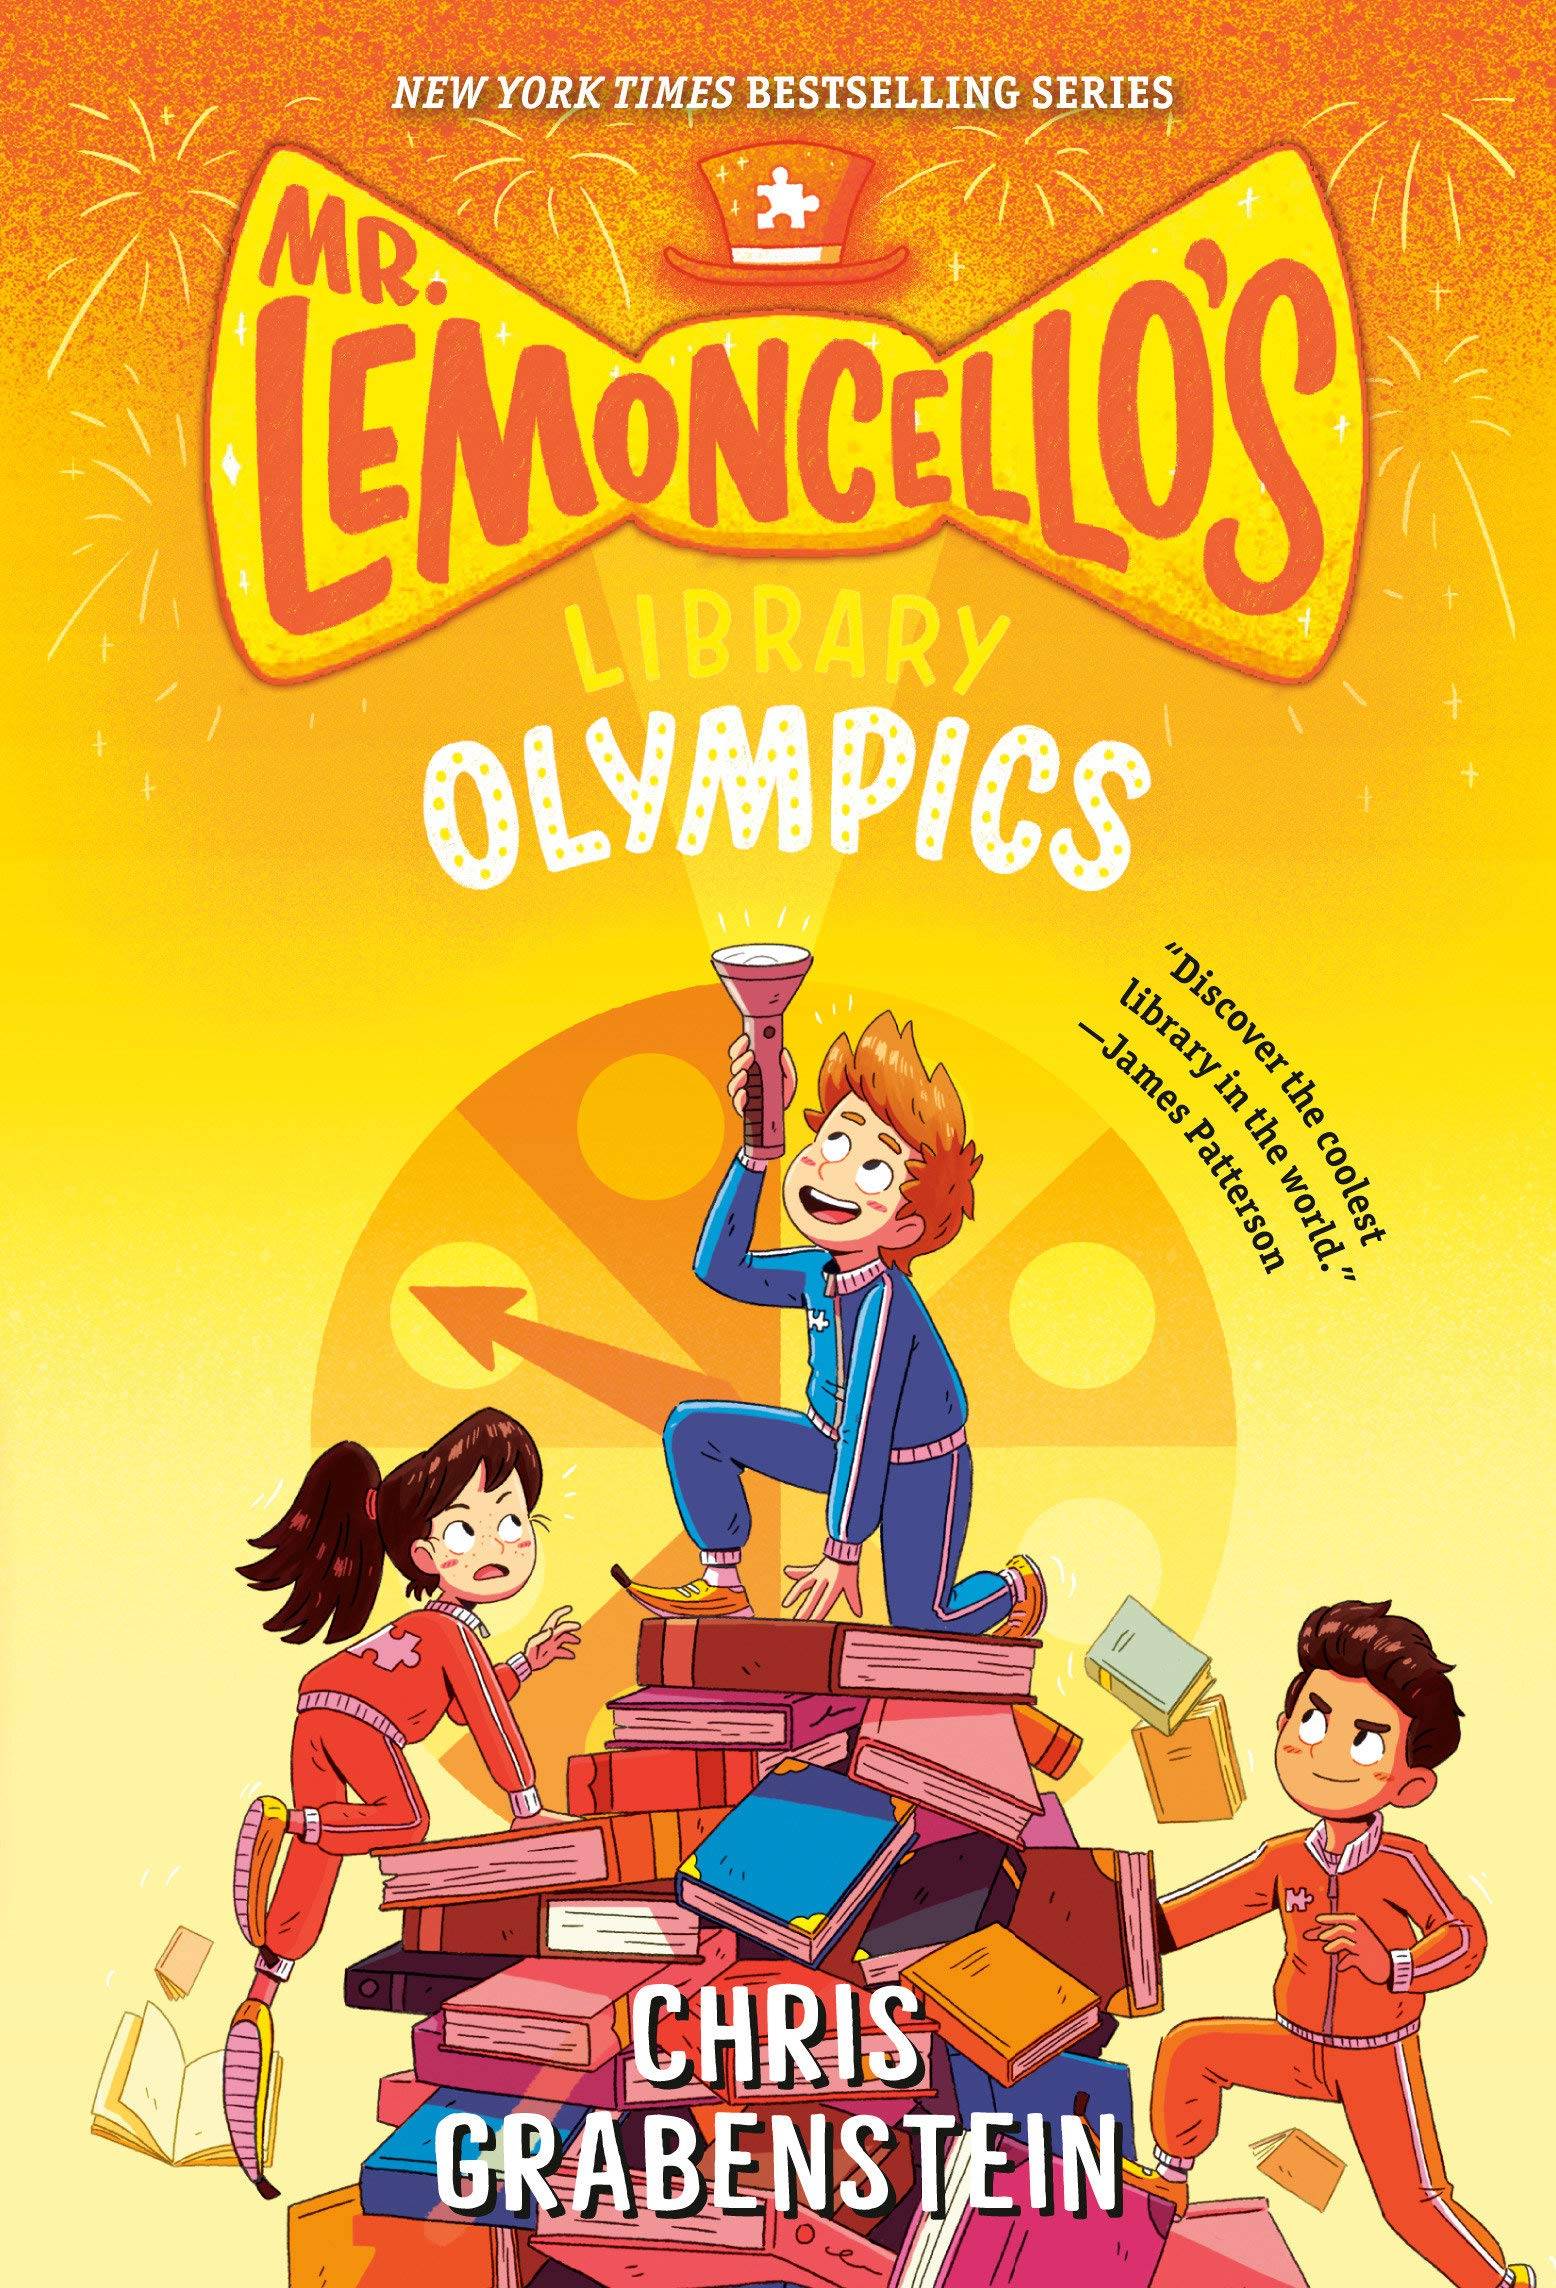 IMG : Mr. Lemoncello's Library Olympics #2